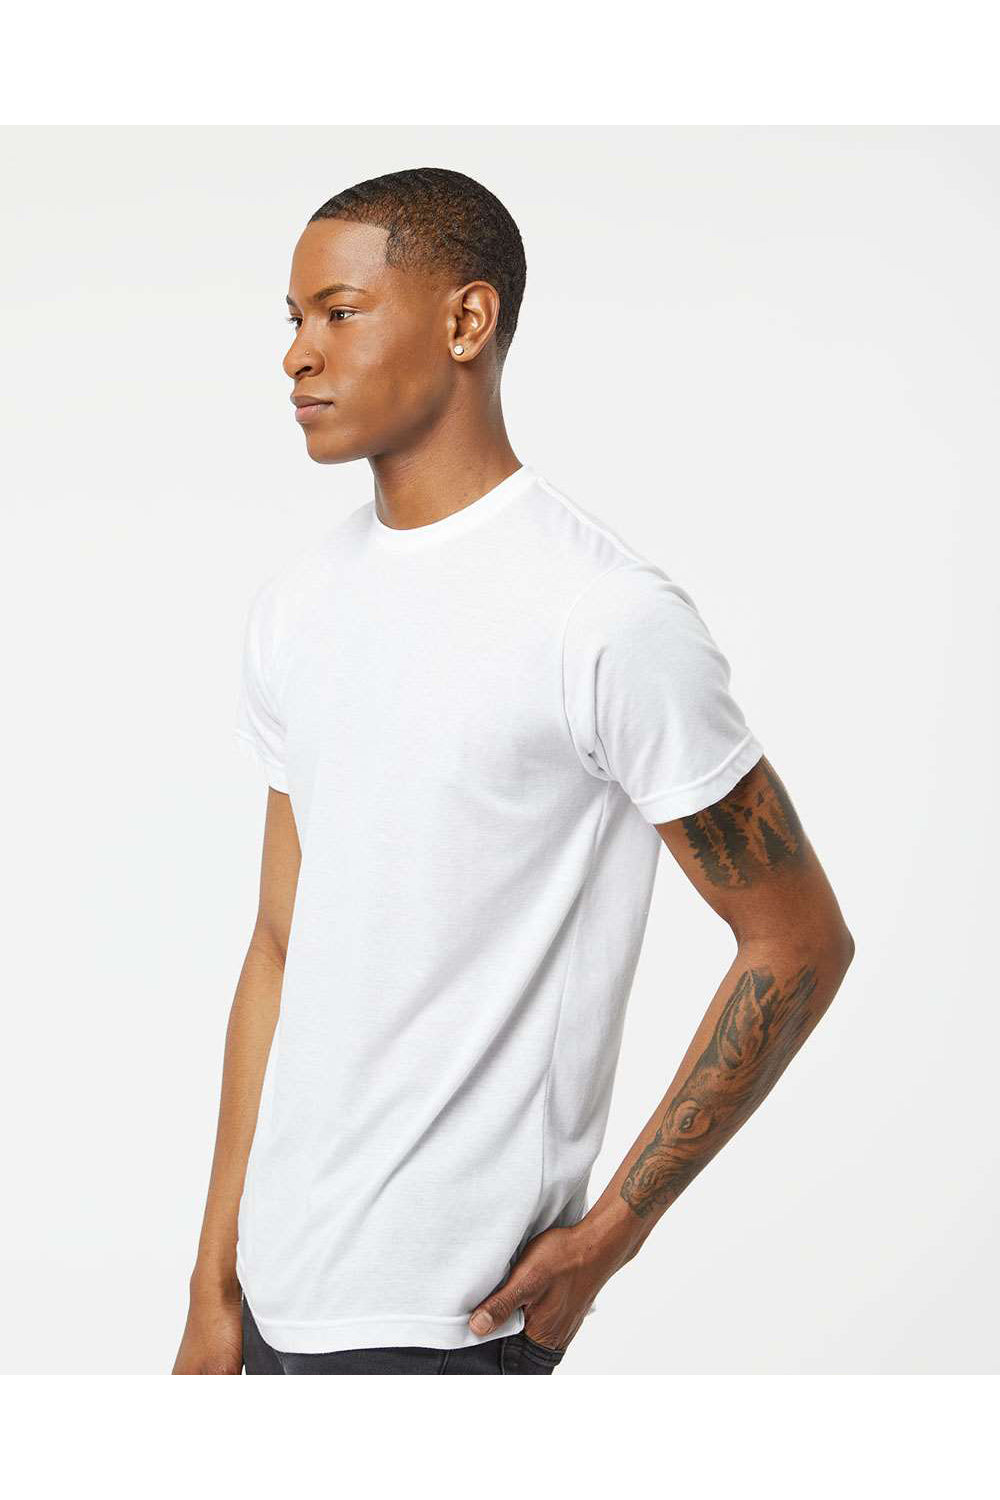 Tultex 241 Mens Poly-Rich Short Sleeve Crewneck T-Shirt White Model Side